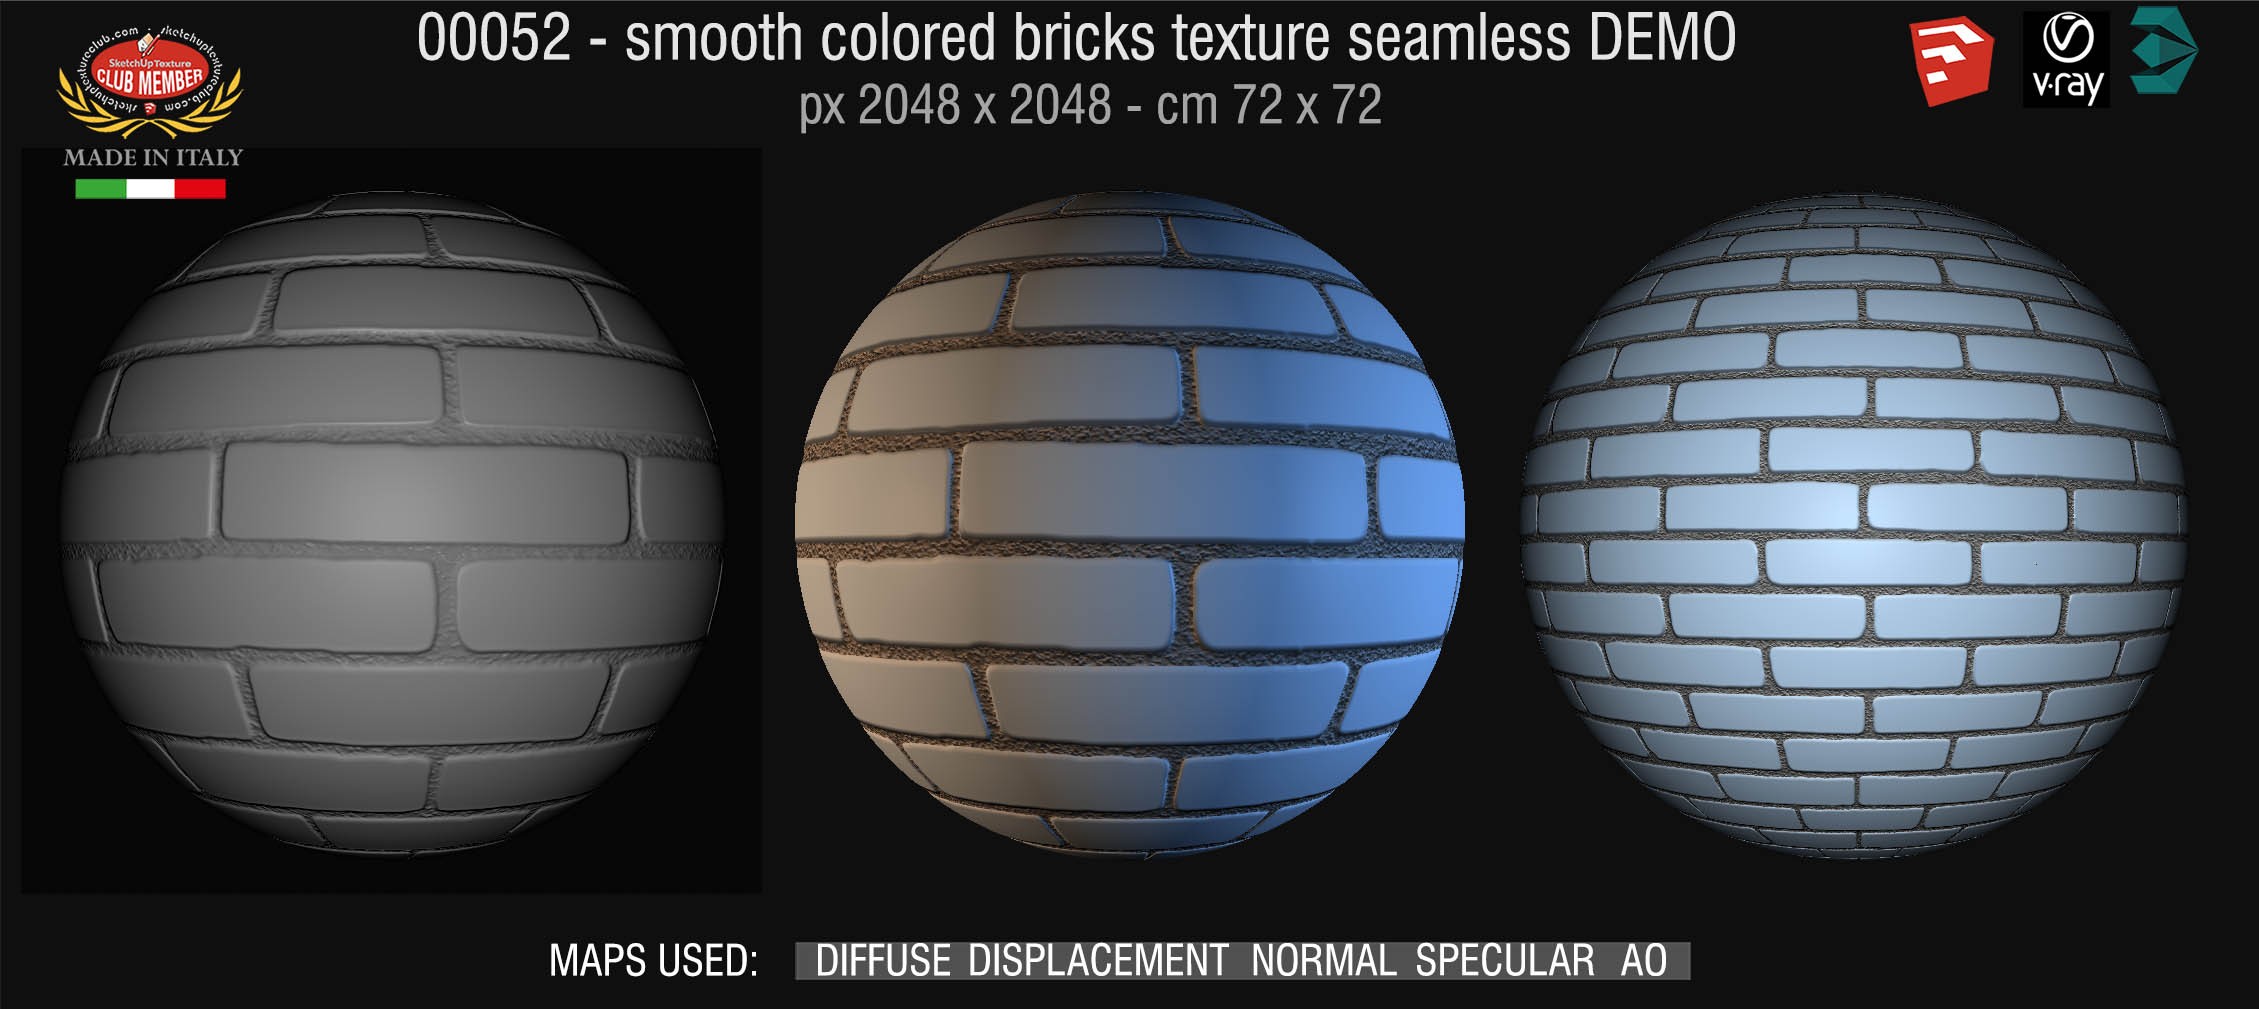 00052 smooth colored bricks texture seamless + maps DEMO